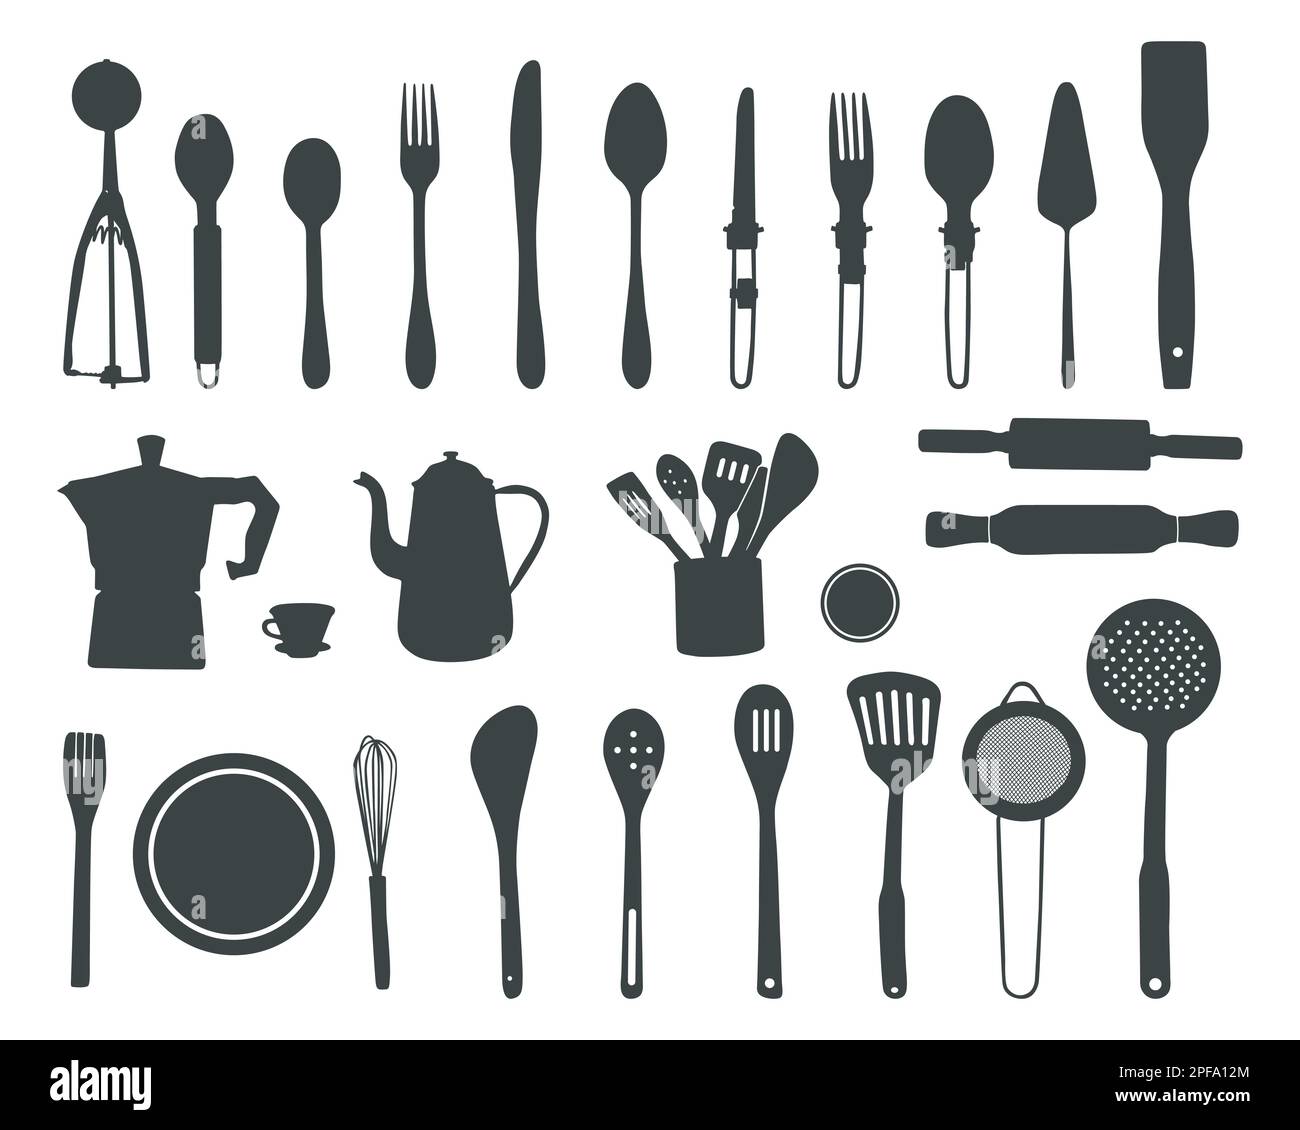 https://c8.alamy.com/comp/2PFA12M/kitchen-tools-silhouette-kitchen-utensils-silhouette-cooking-tools-svg-v02-2PFA12M.jpg